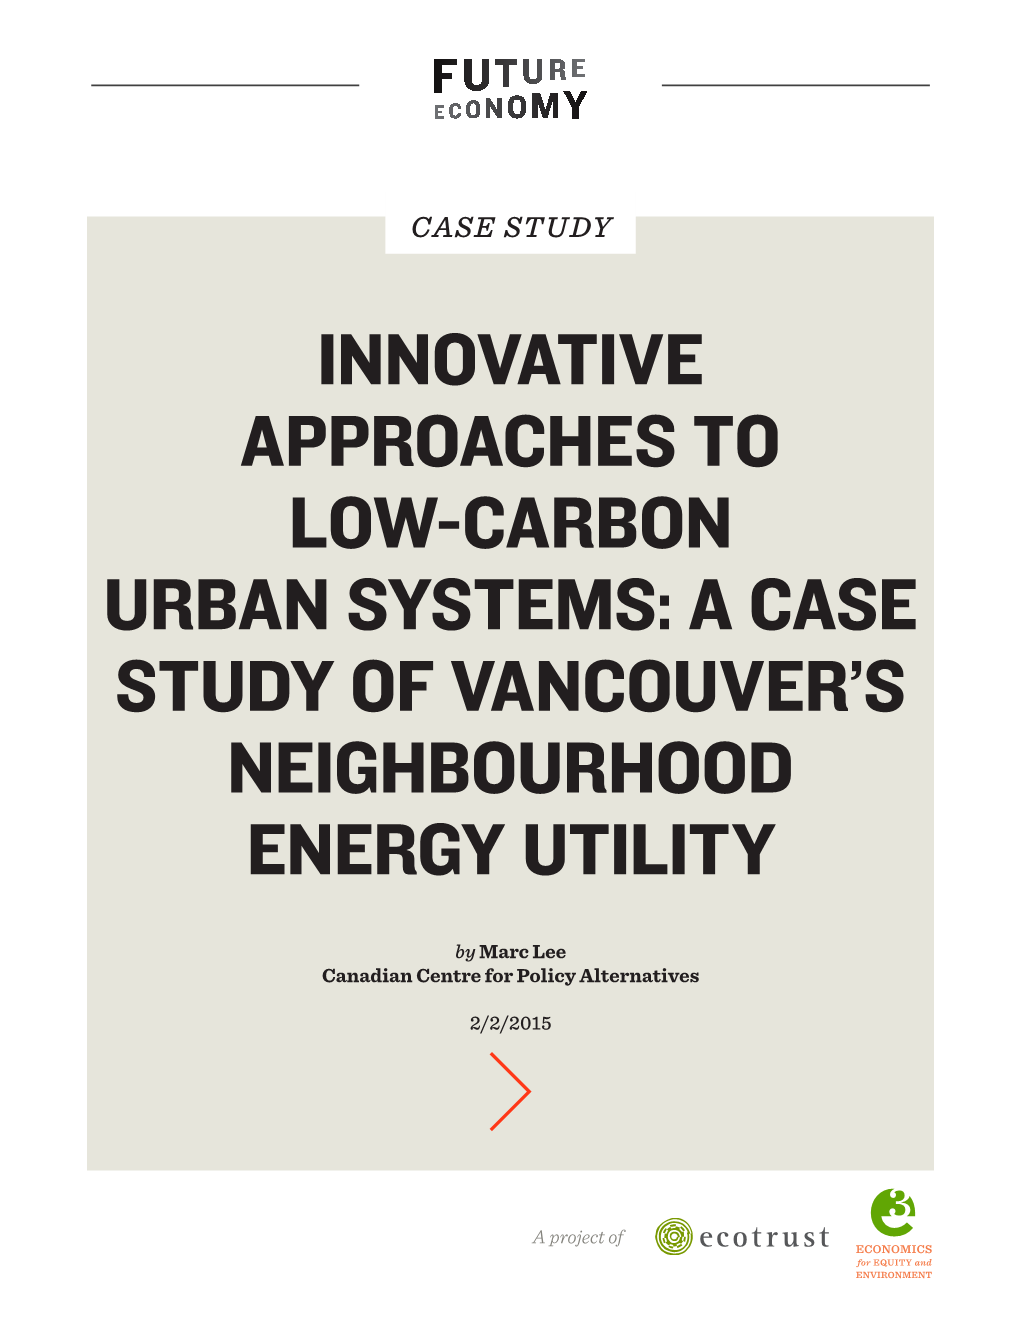 A Case Study of Vancouver's Neighbourhood Energy Utility